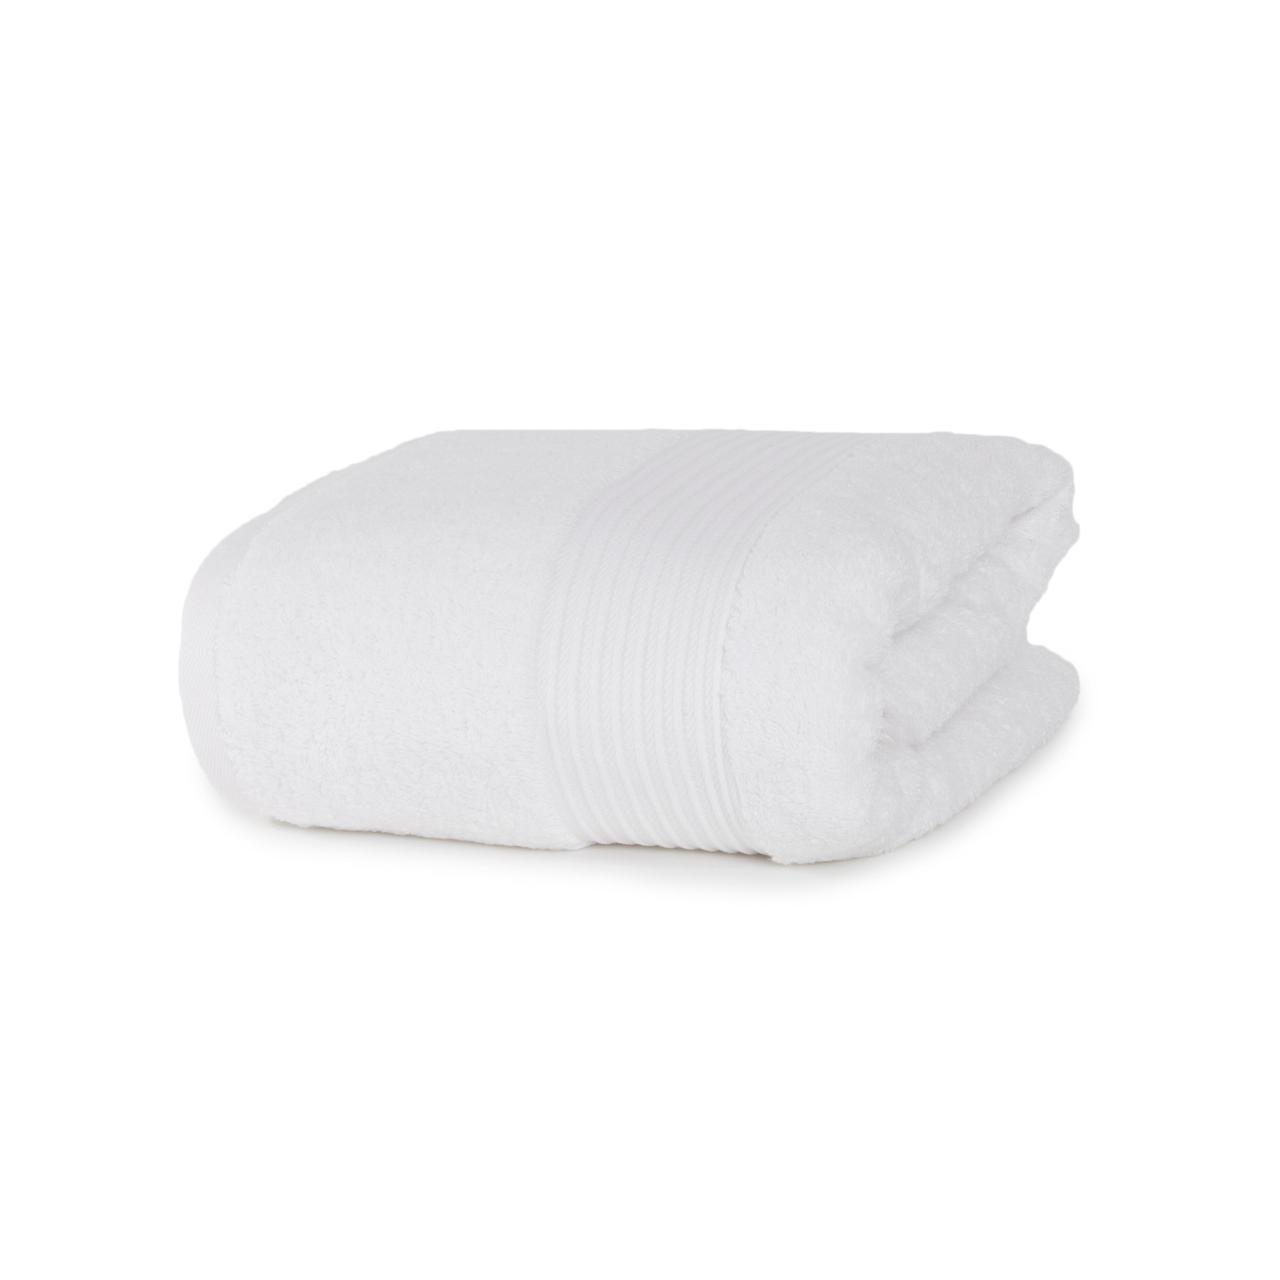 Bliss 100% Pima Cotton Bath Sheet, White